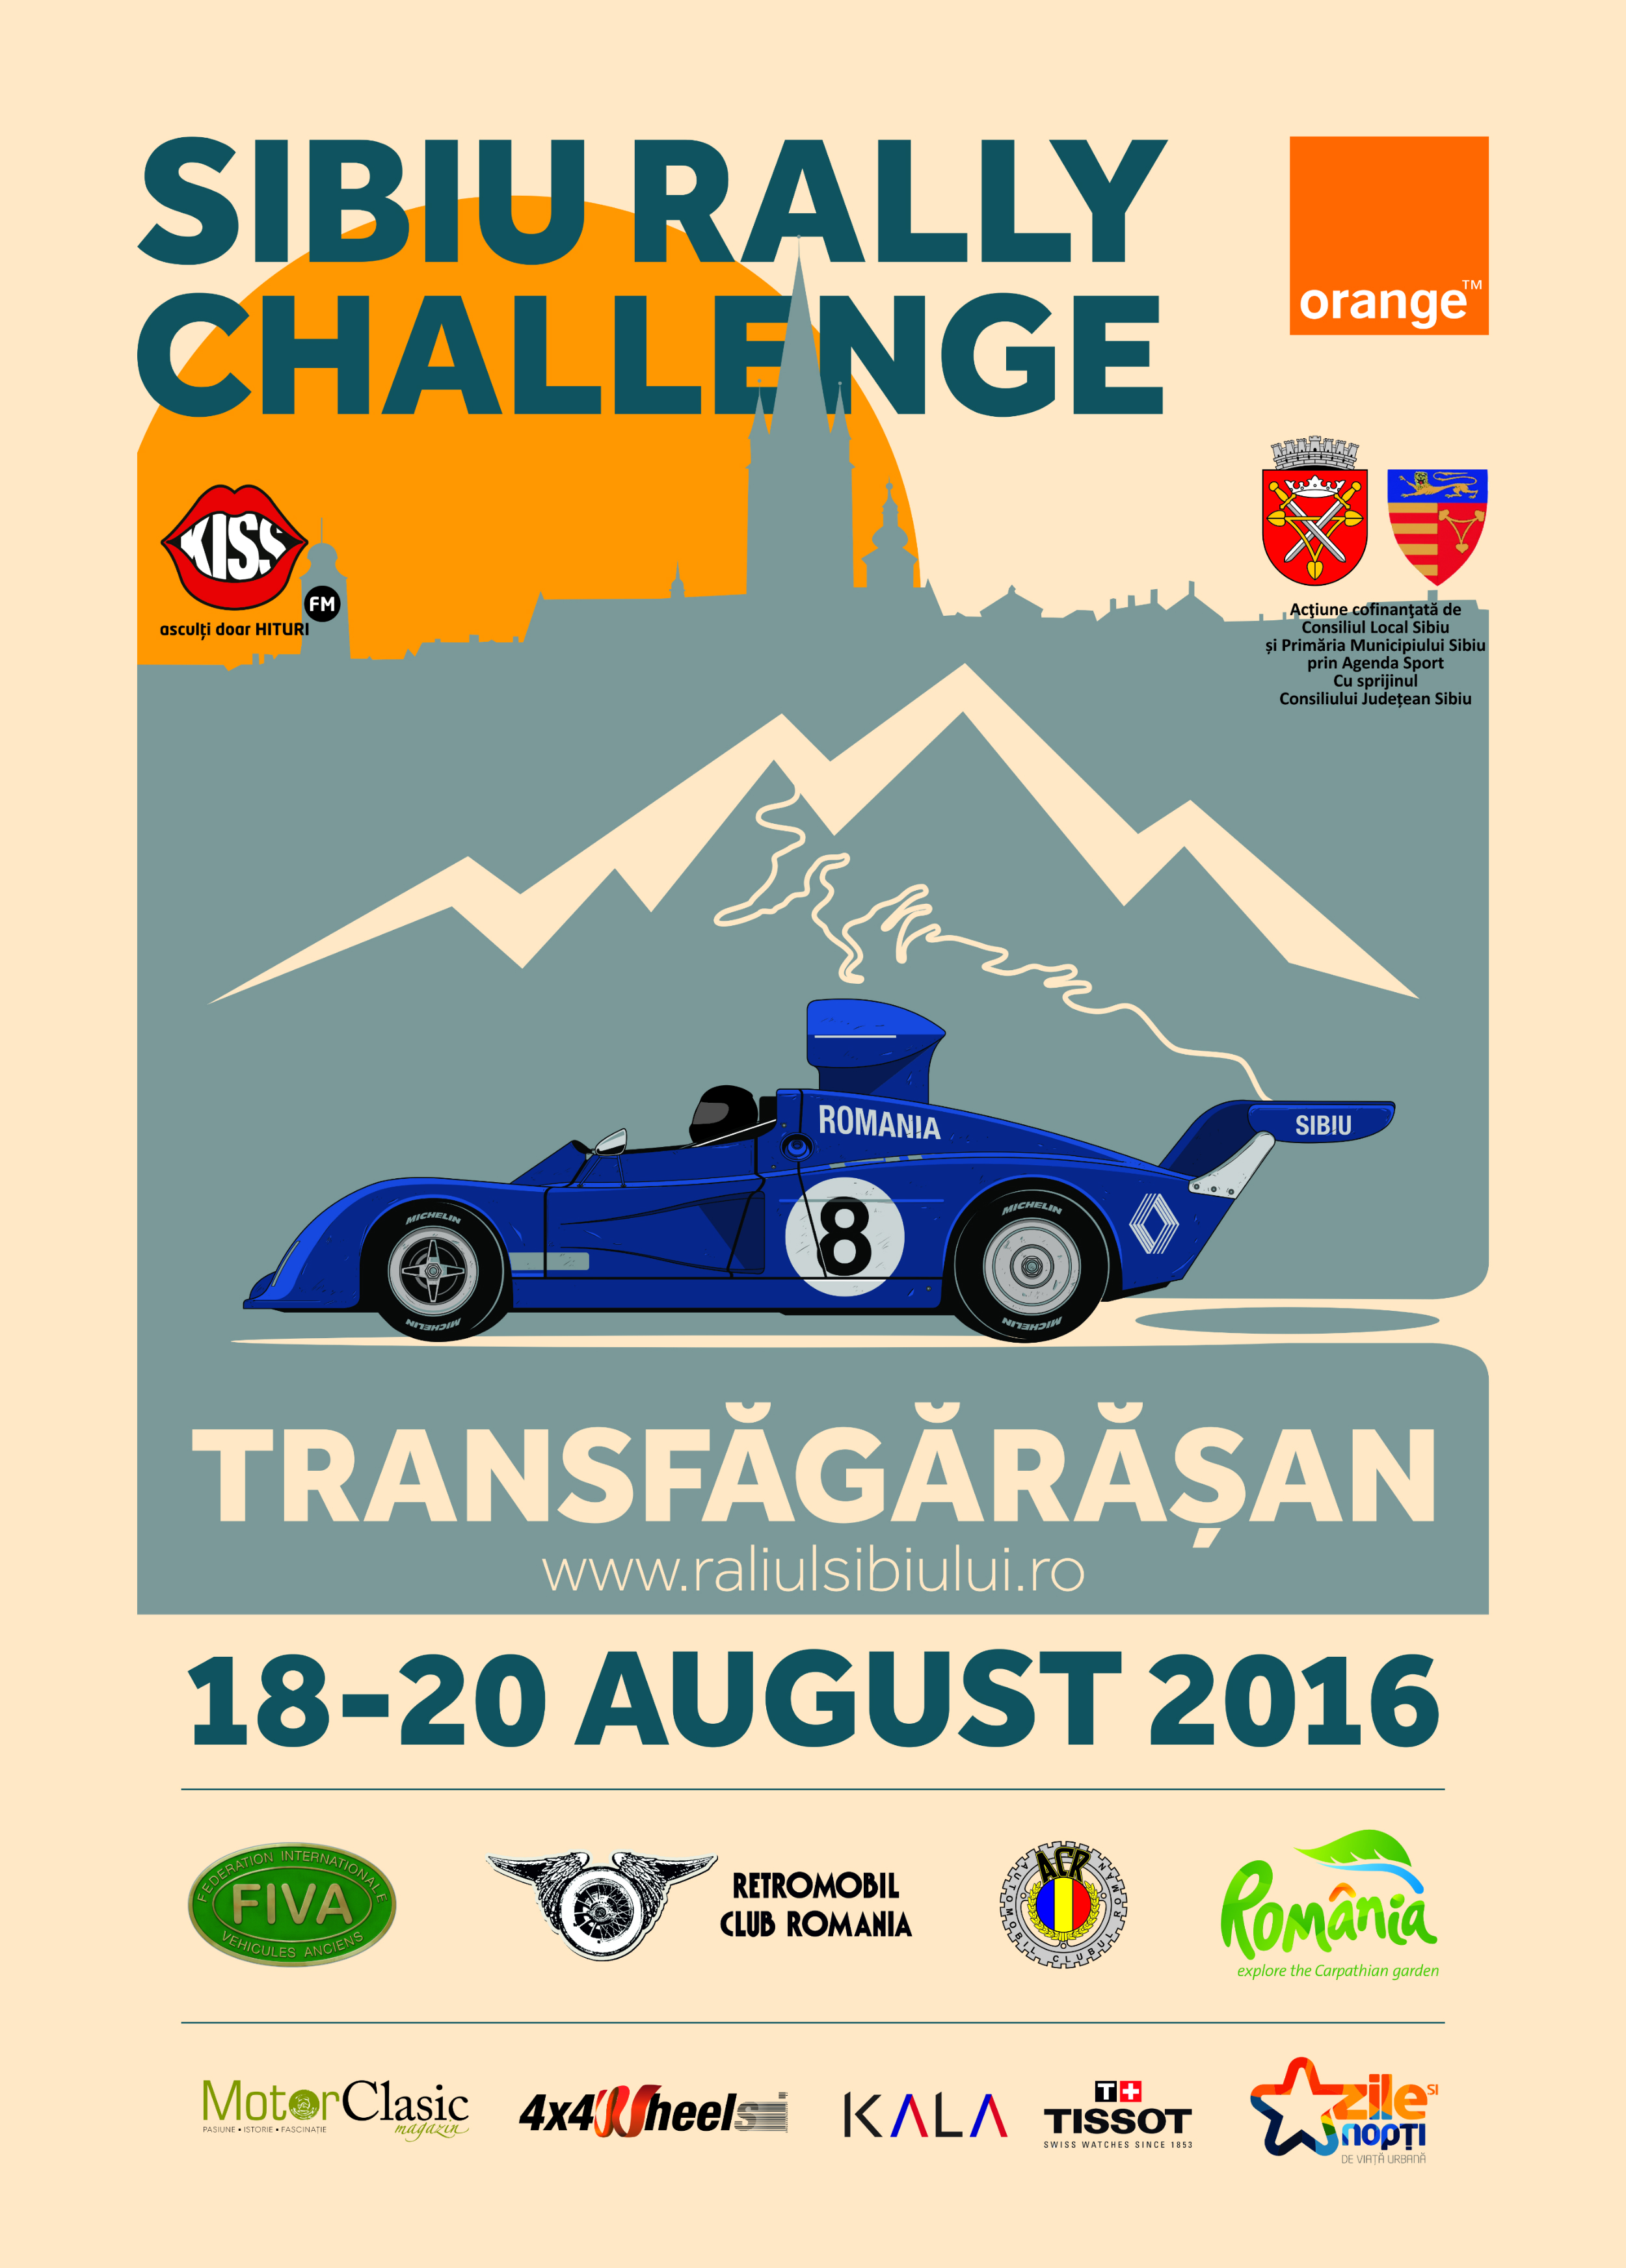 72 de echipaje vor lua startul la Sibiu Rally Challenge 2016